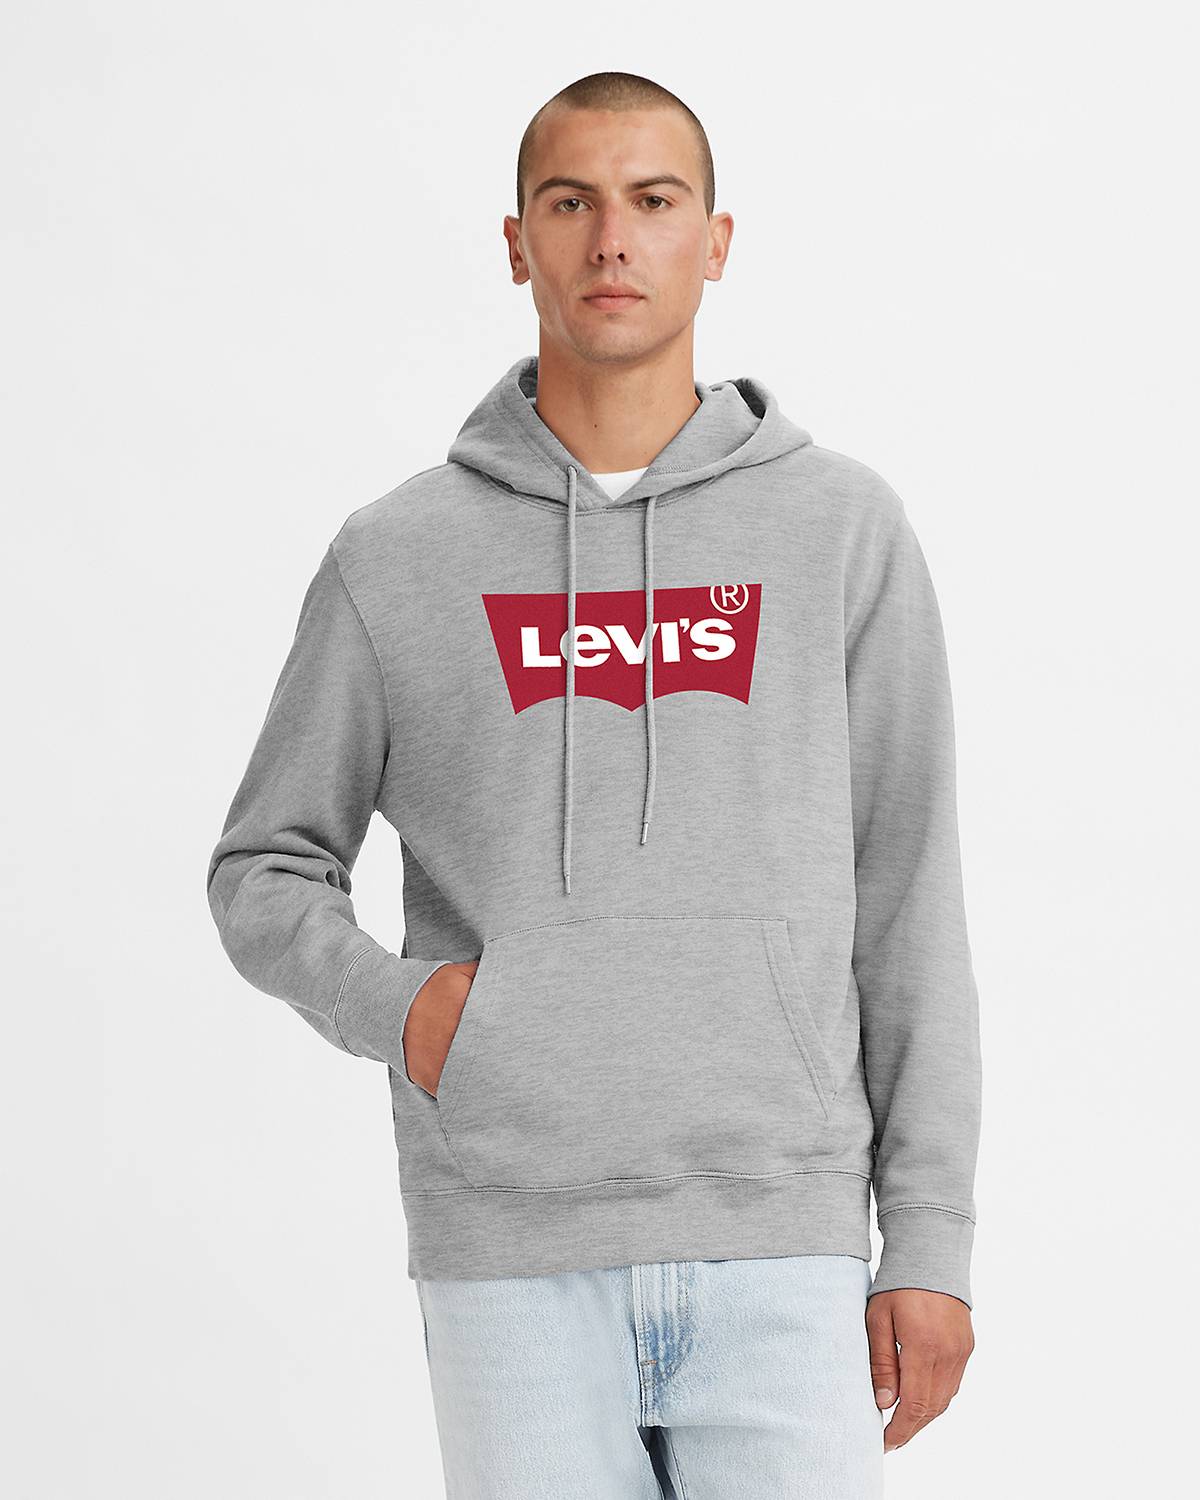 Model wearing grey hooded sweatshirt with red Levi's logo.